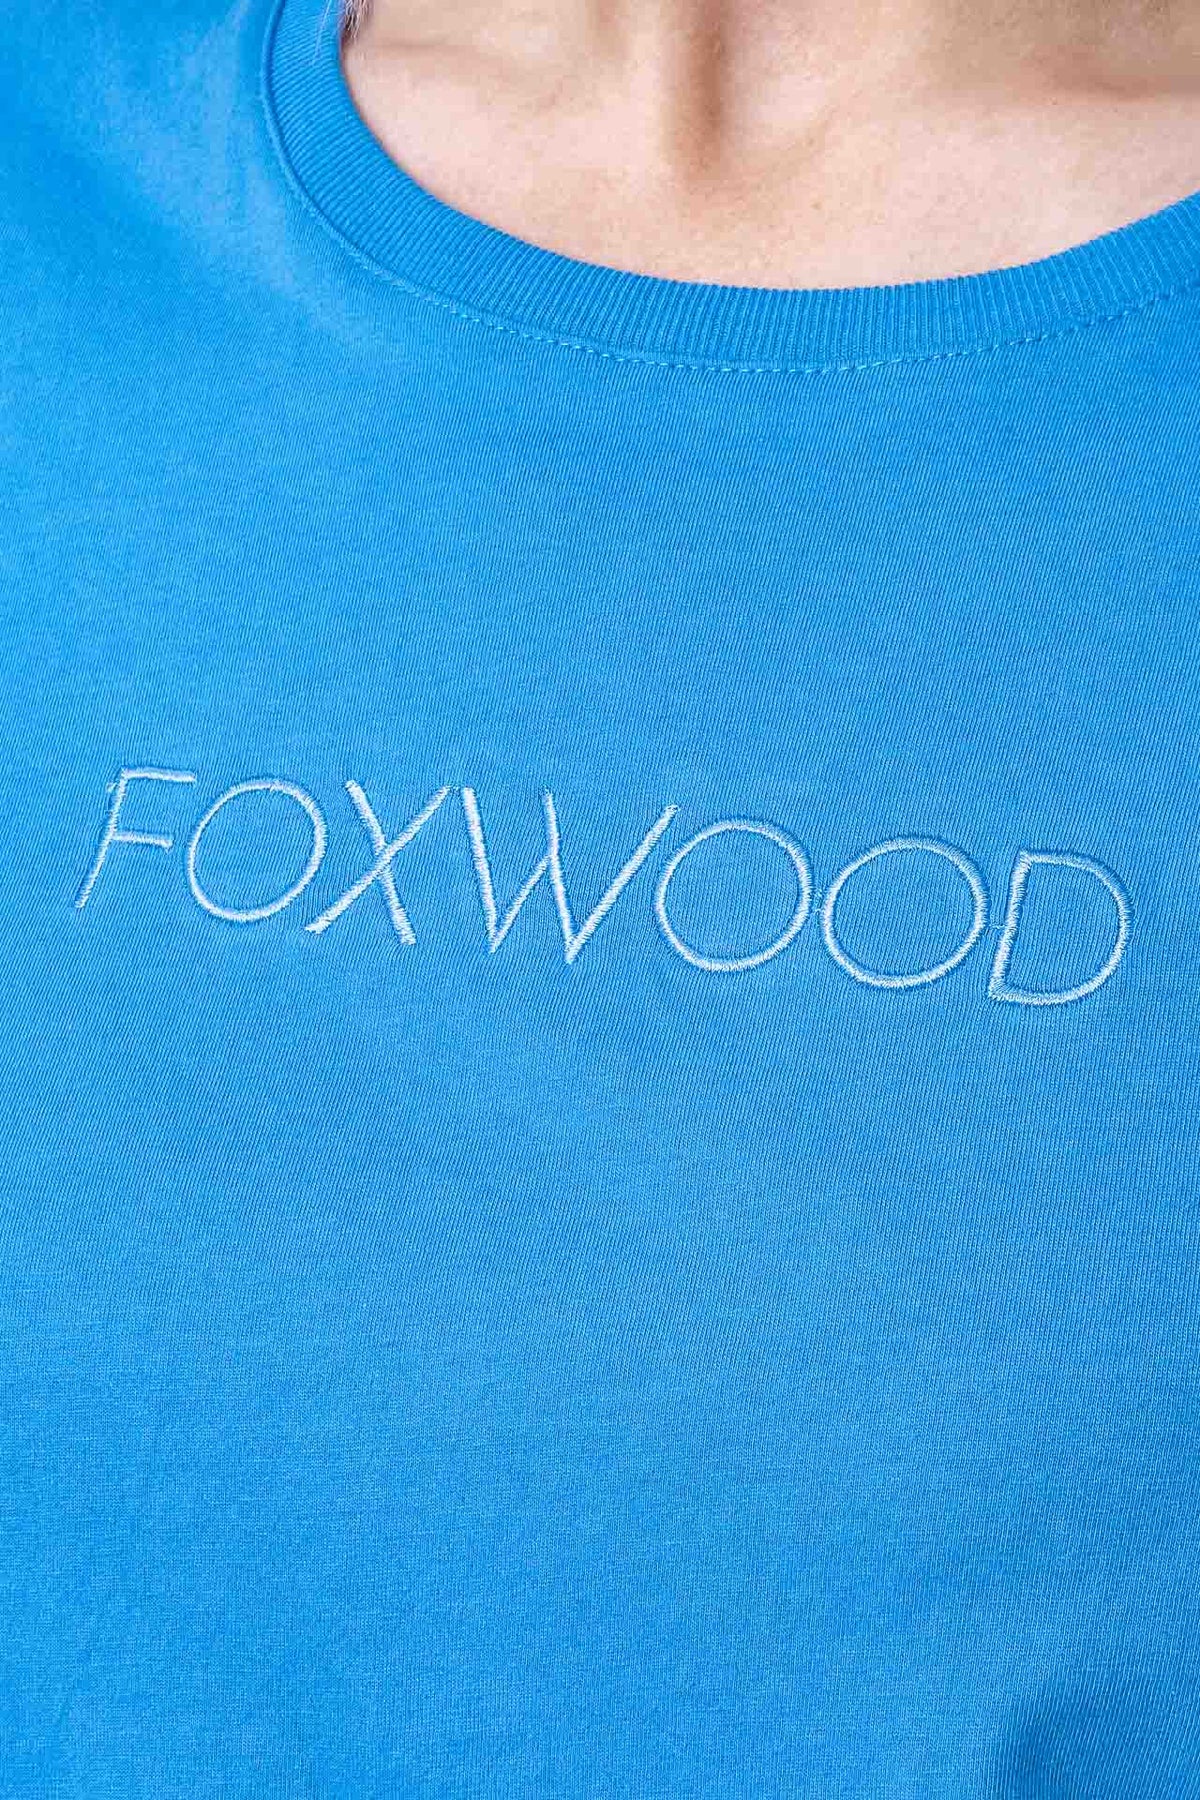 Foxwood Tee in Blue - Foxwood